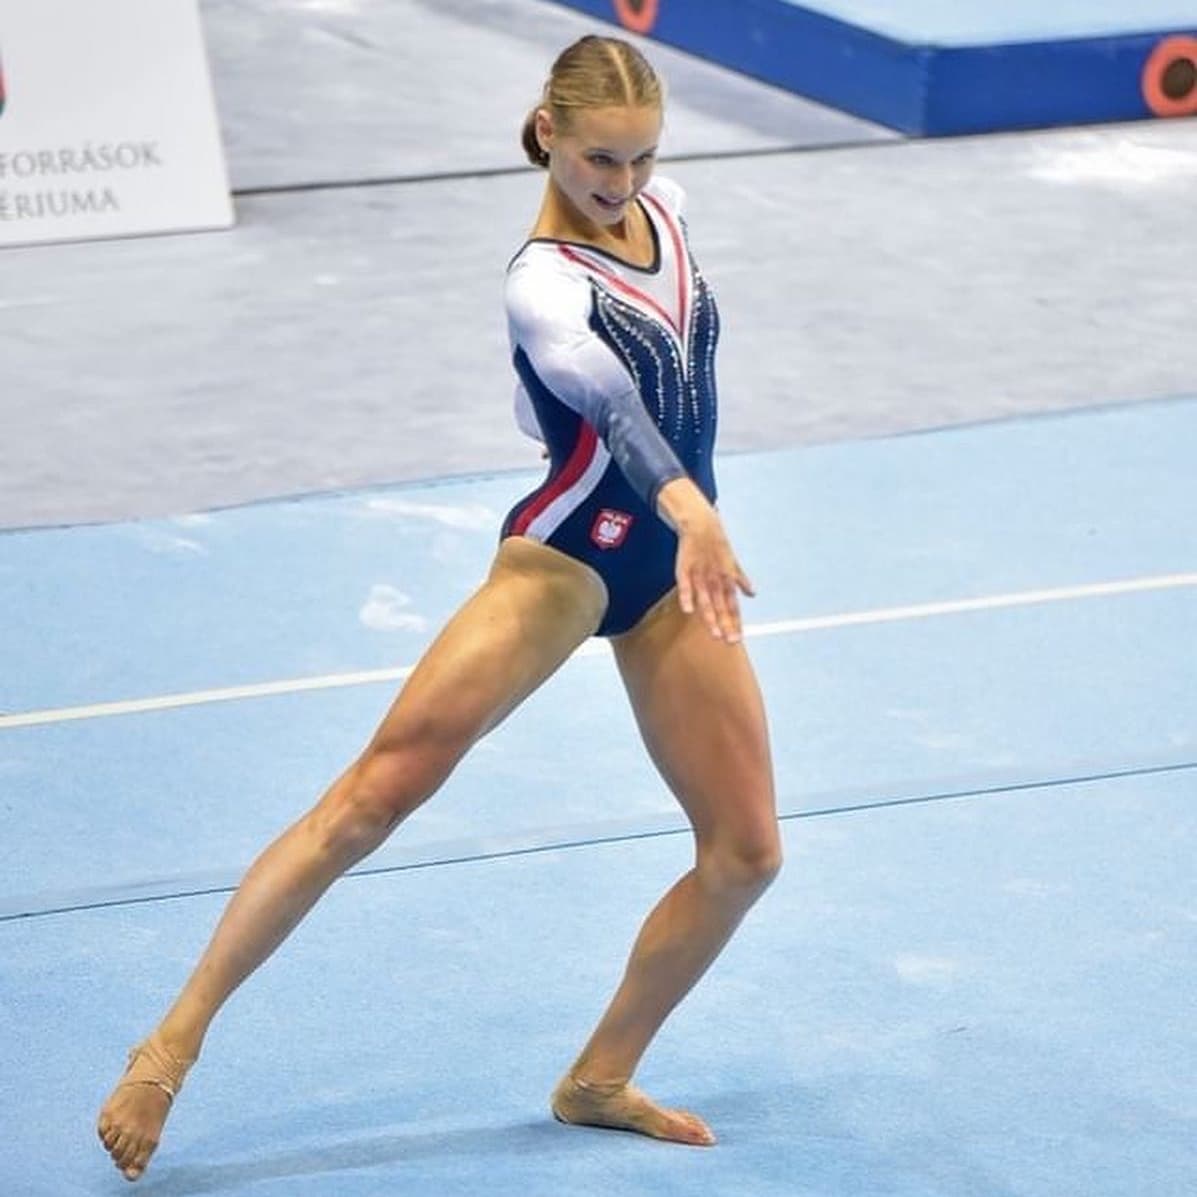 Vegan Athlete Ada Competing in Gymnastics Competition